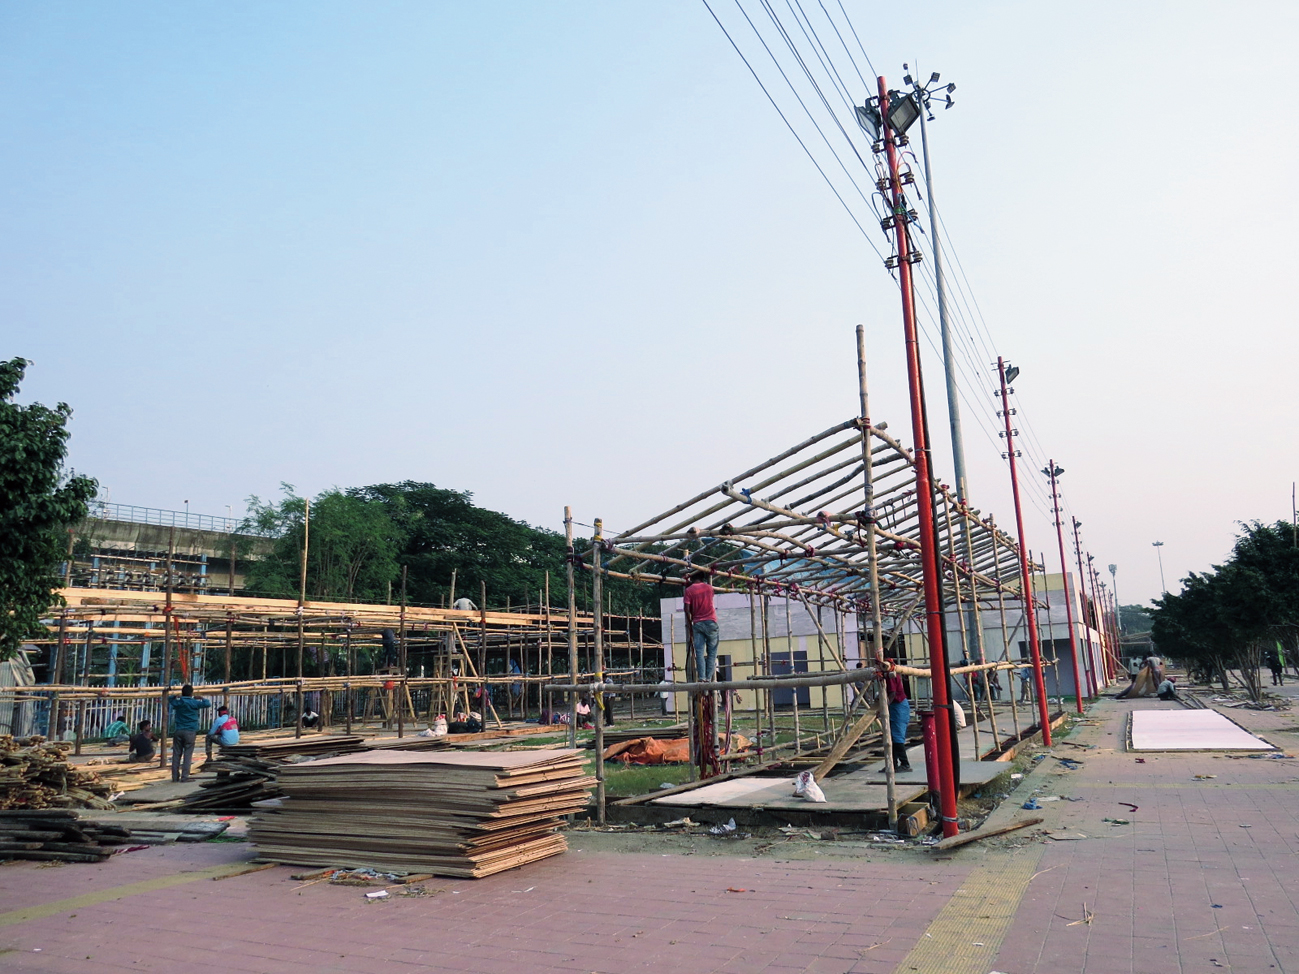 Stalls being set up at the Central Park fairground for Bidhannagar Mela (Utsav). 